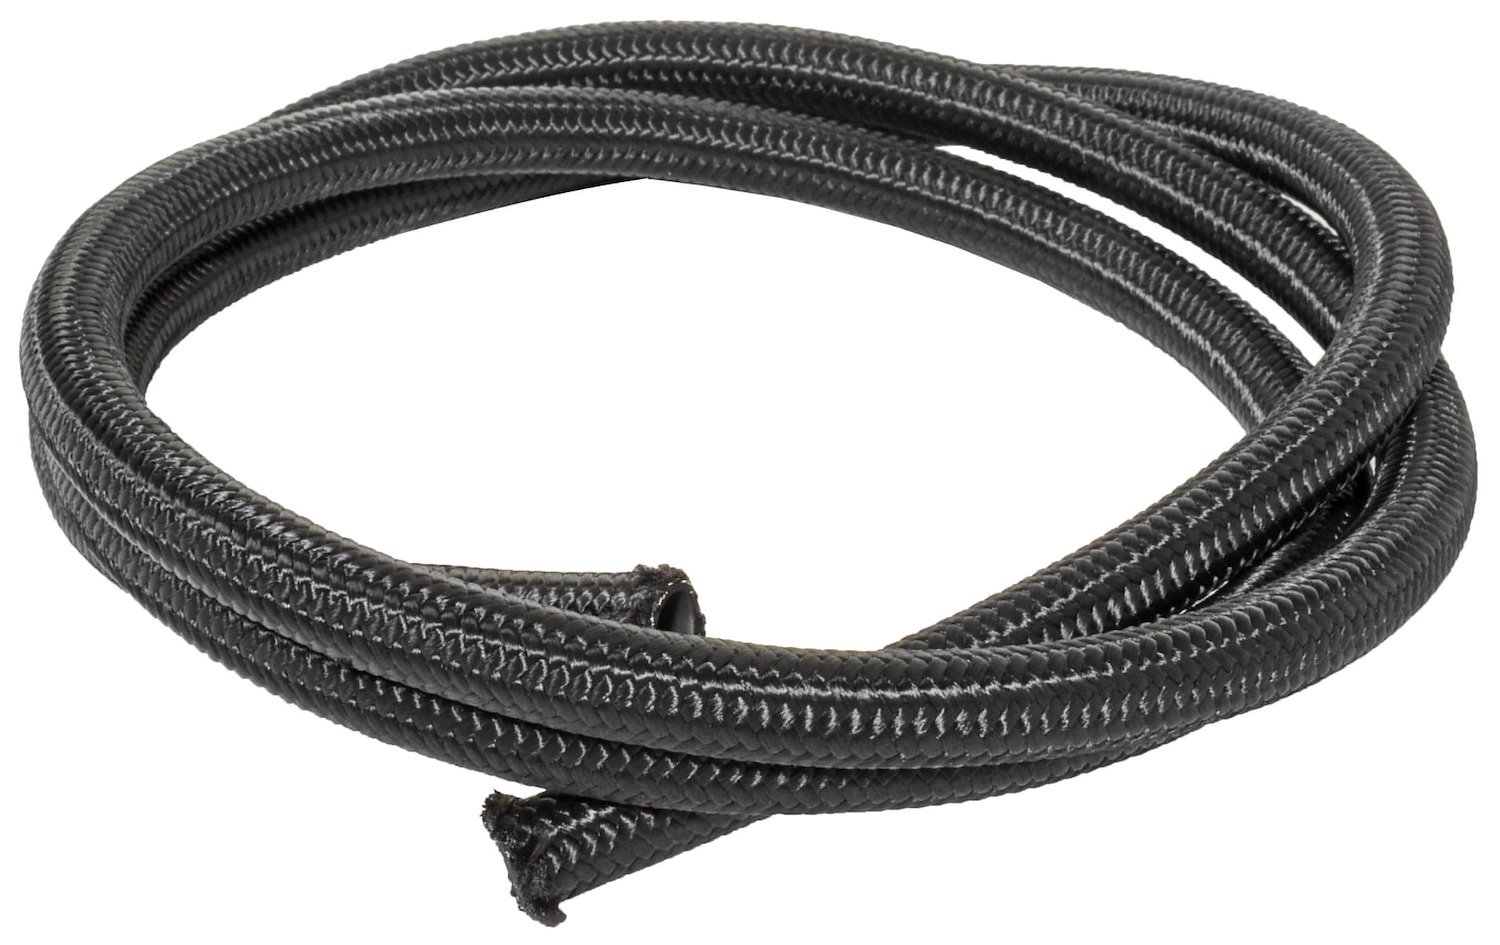 Pro-Flo 350 Black Nylon Braided Hose [-6 AN, 3 ft]